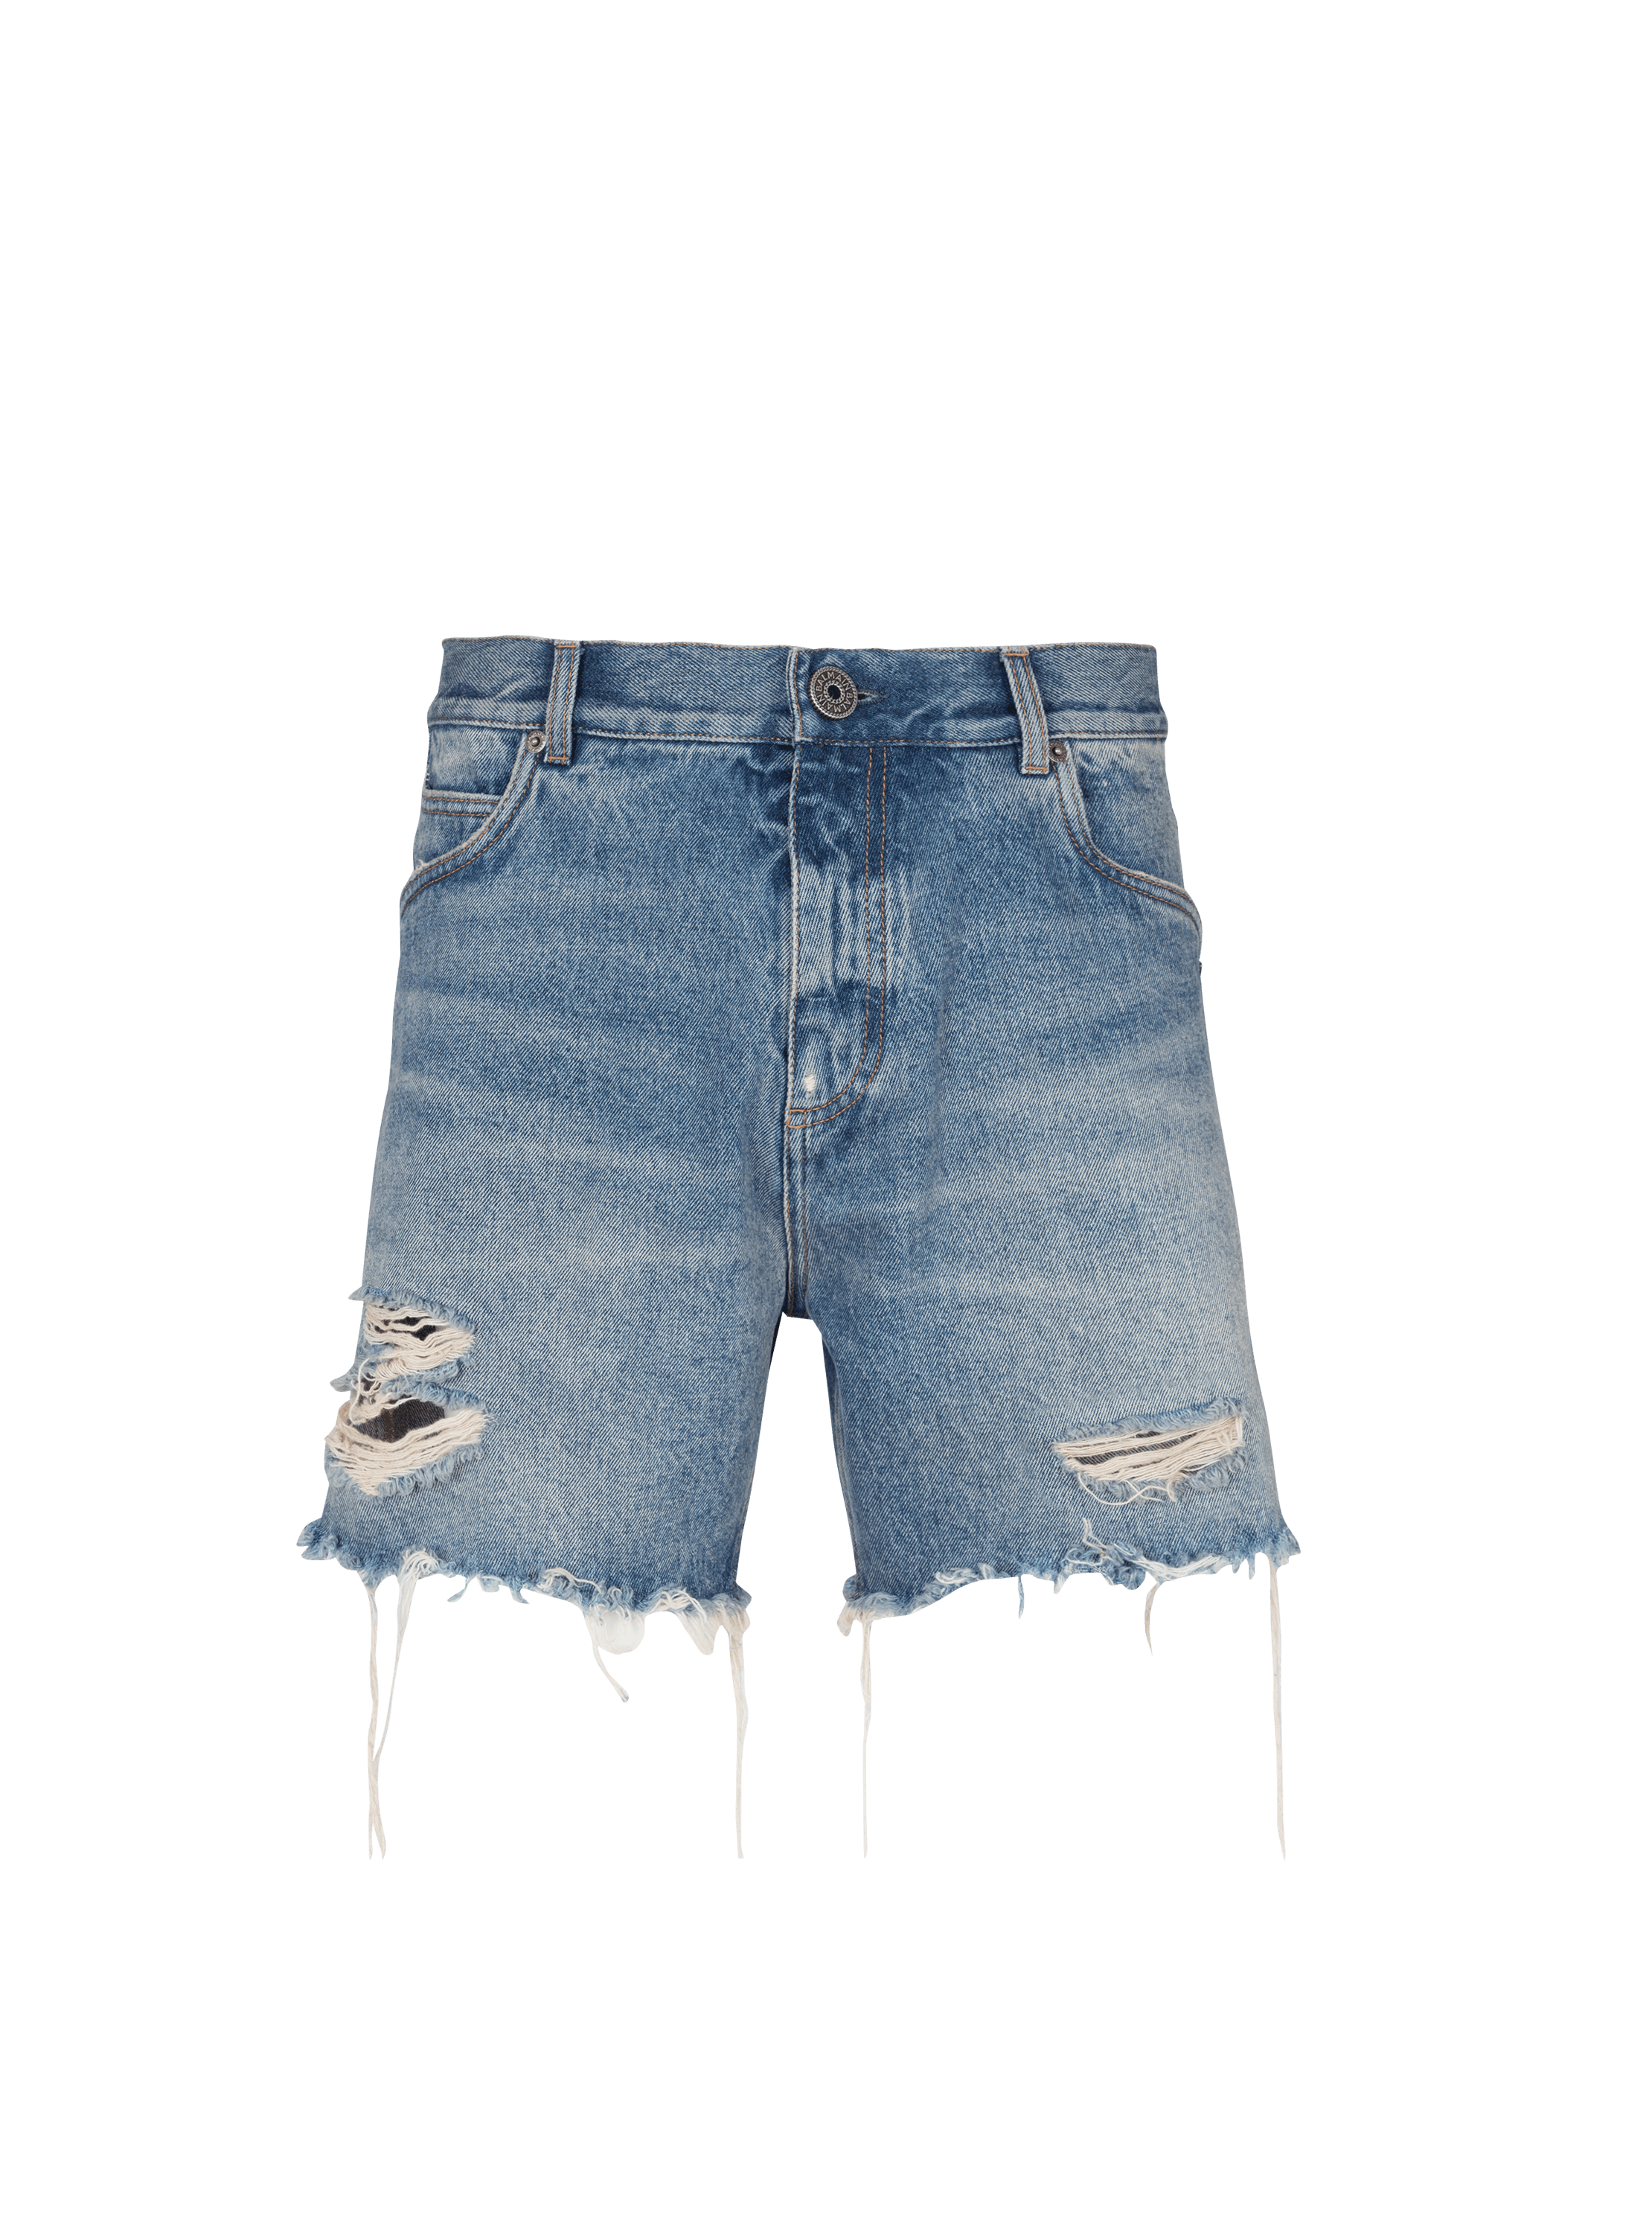 Unisex shorts in vintage Blue Wash denim